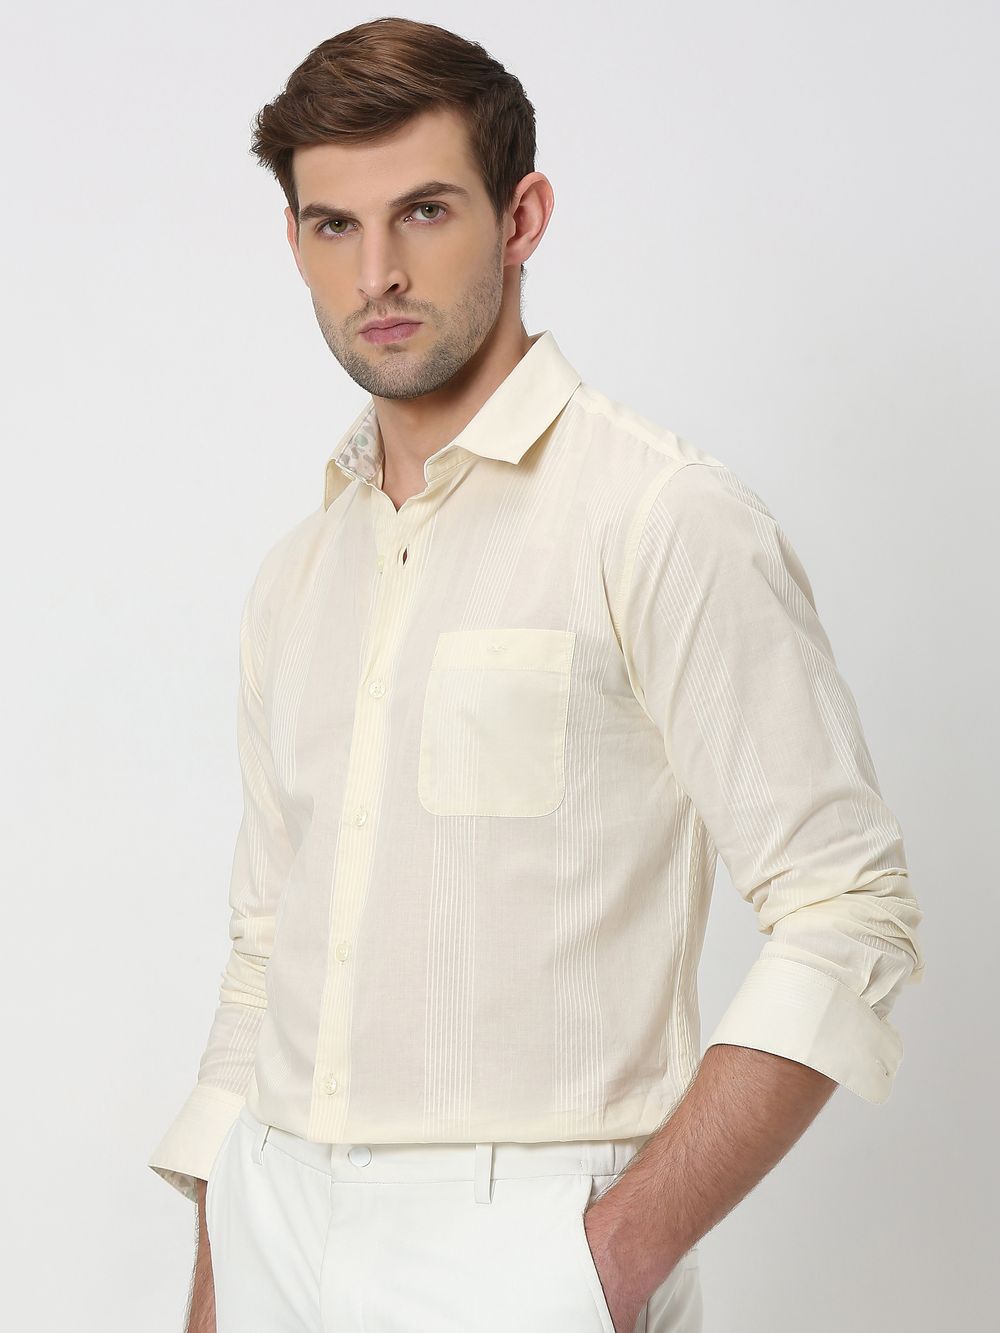 Off White Self Stripe Plain Slim Fit Casual Shirt